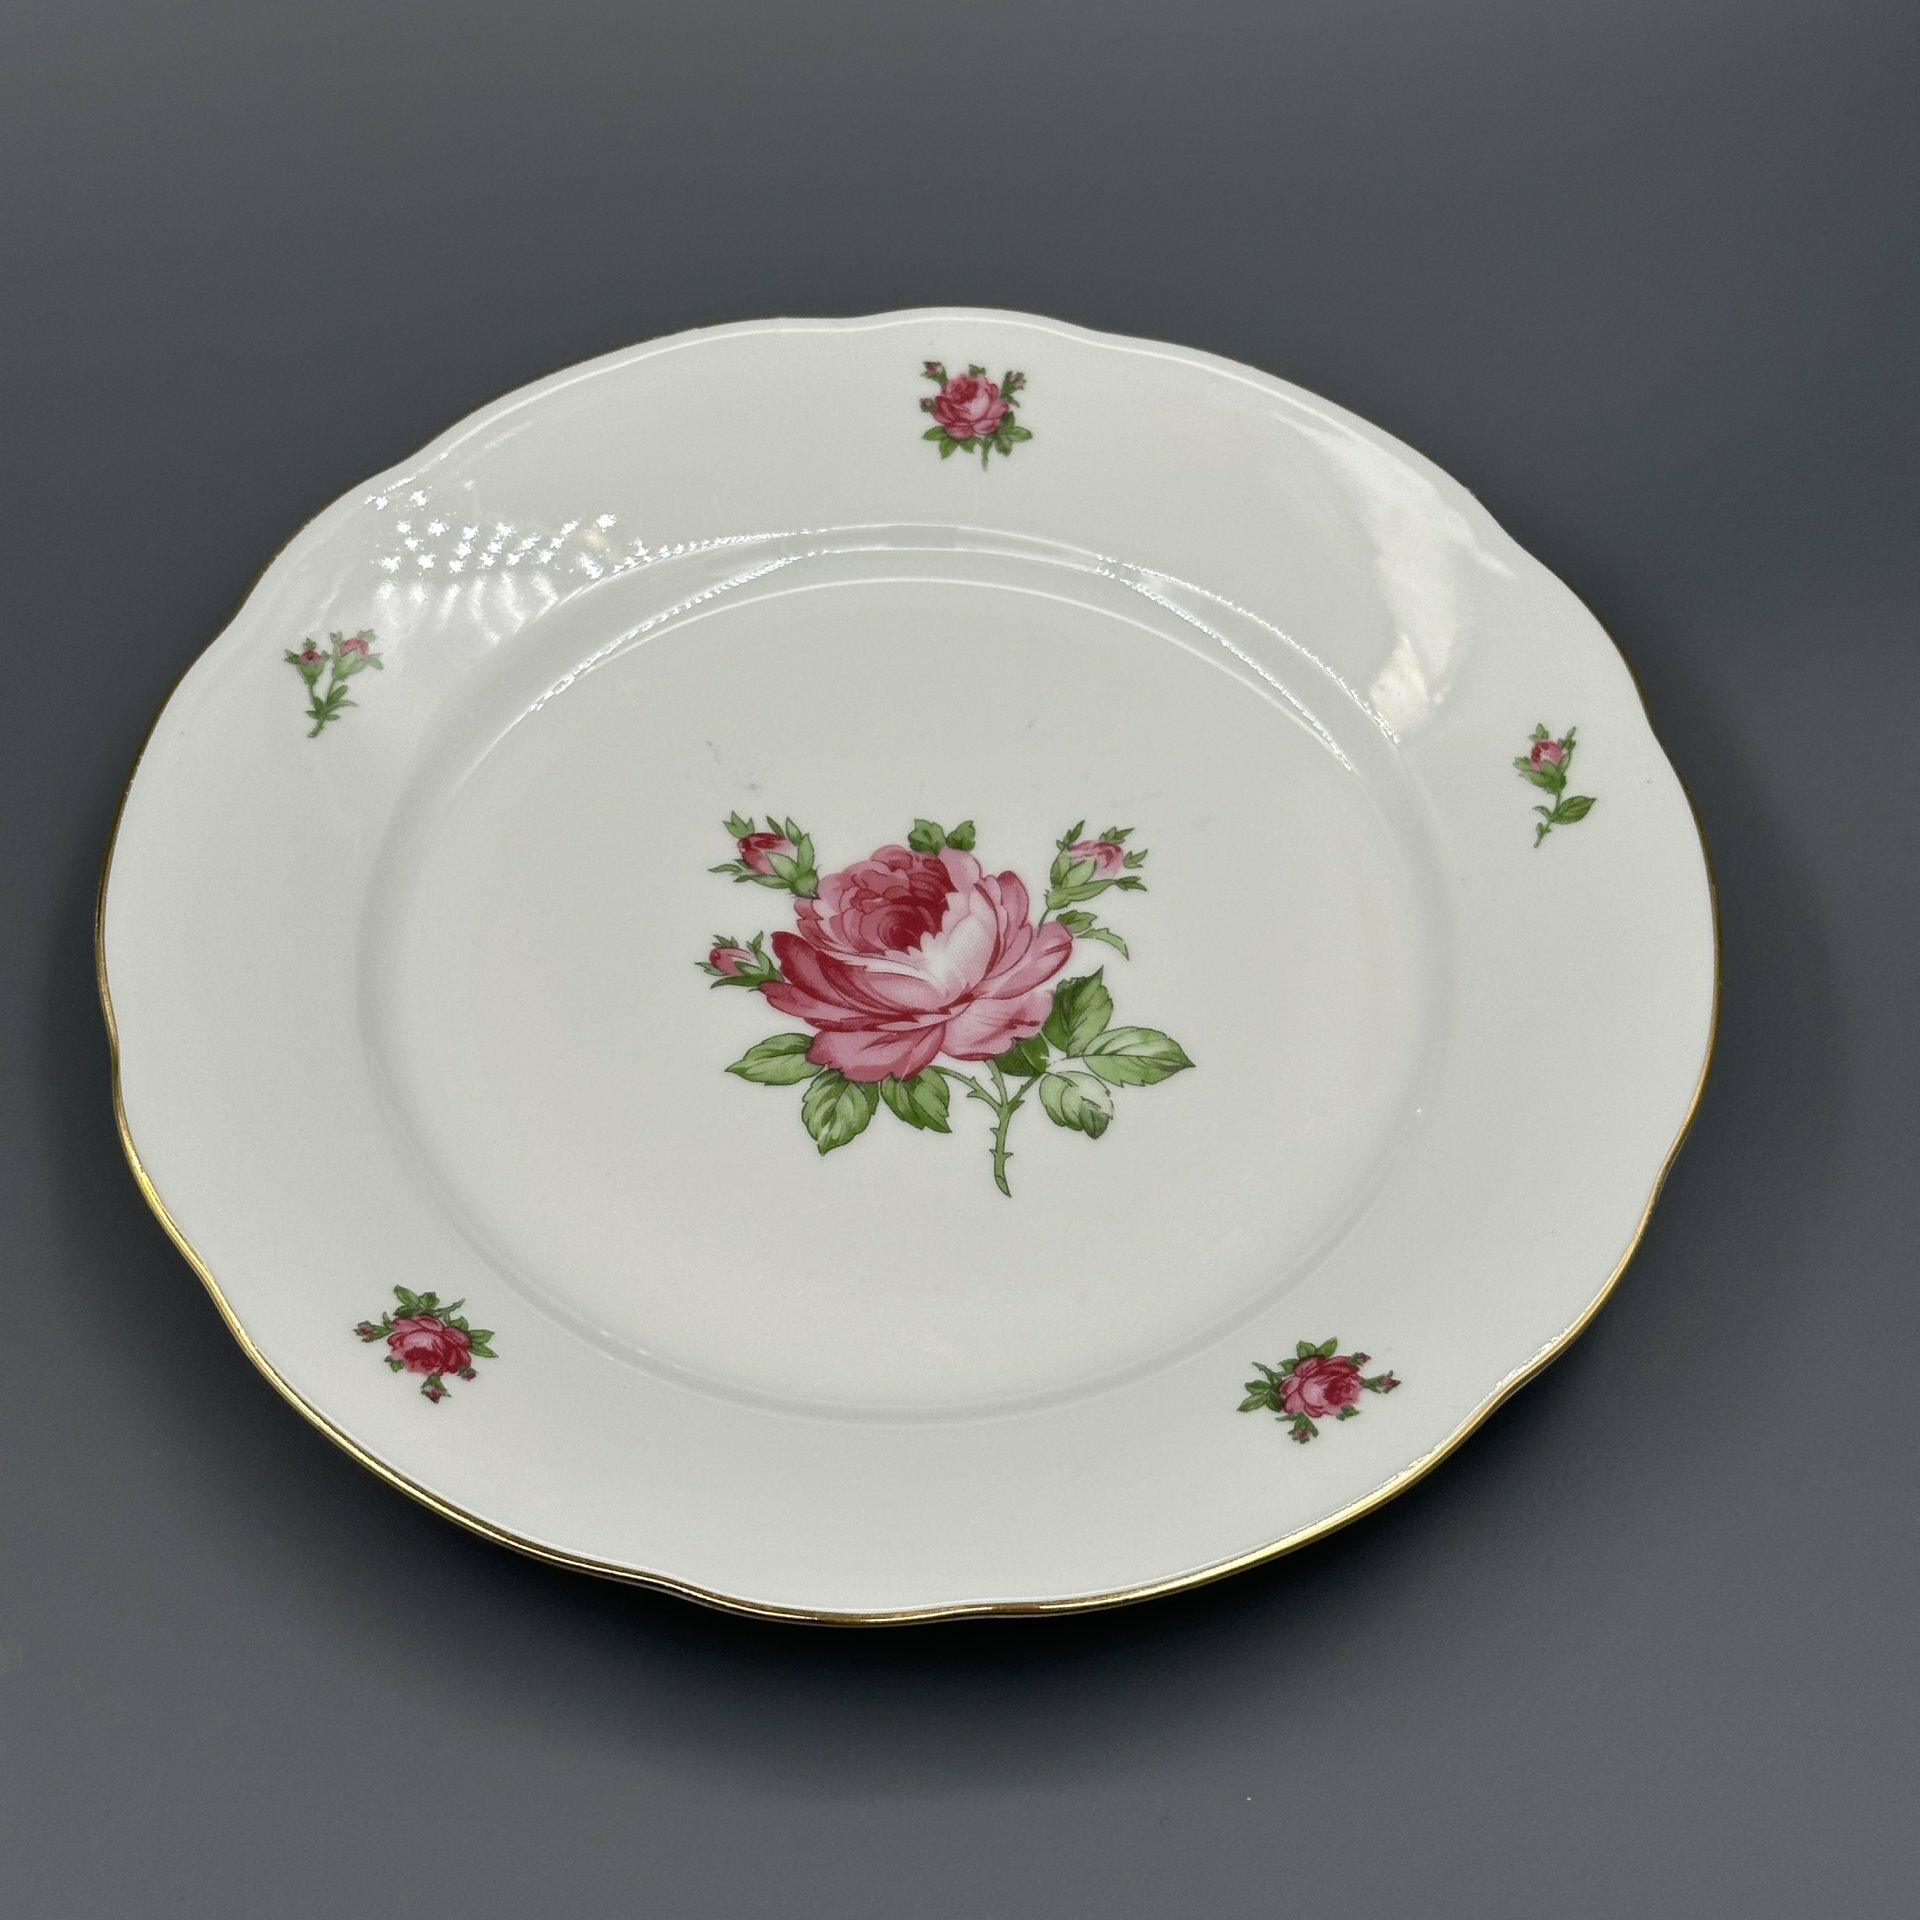 Набор тарелок на 5 персон с изображением роз (15 предметов), фарфор, деколь